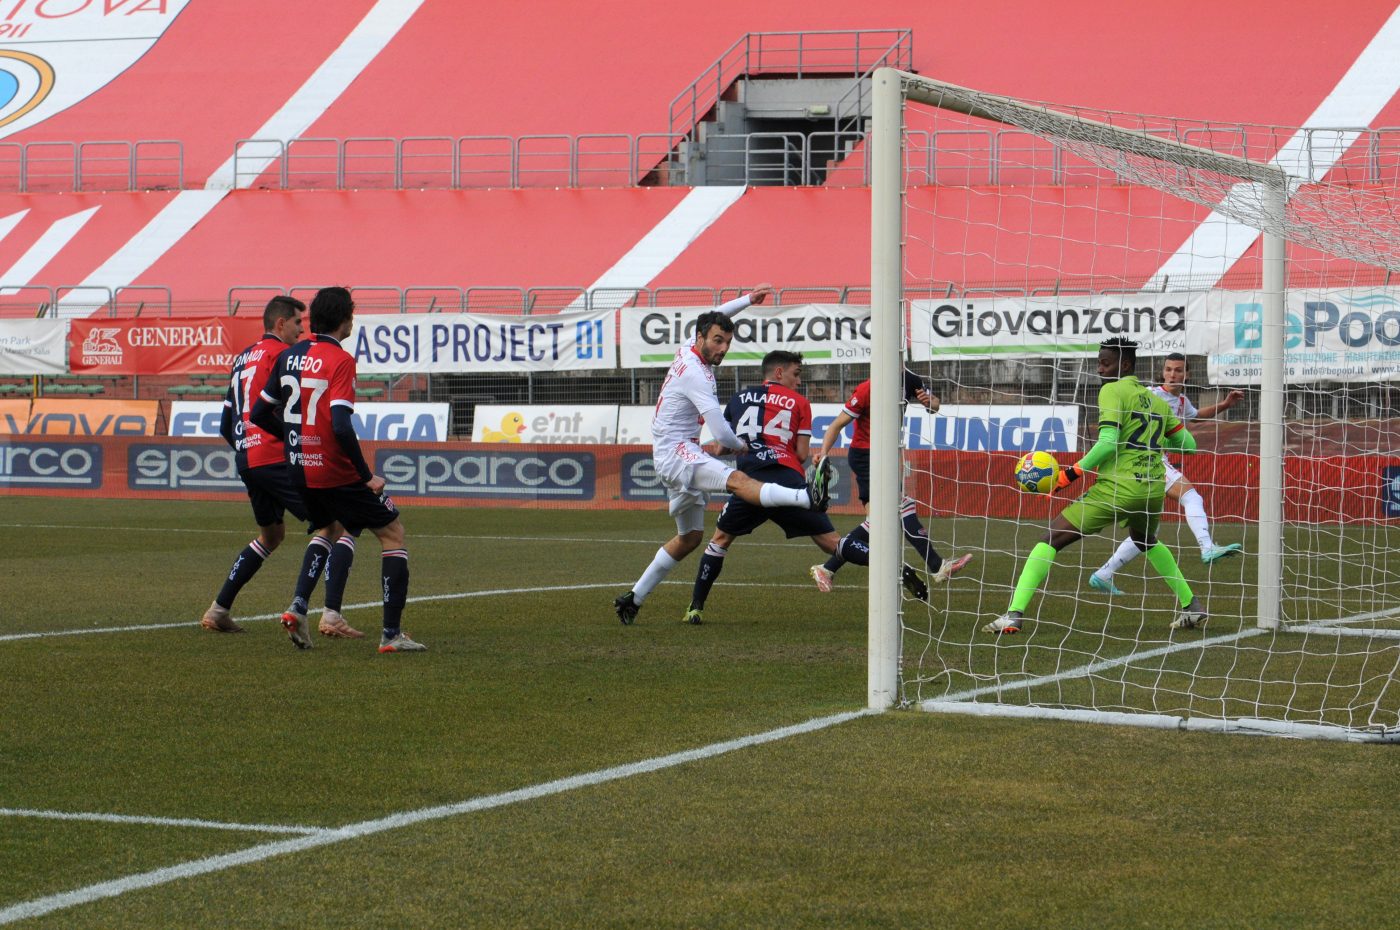 Serie C – Calcio – Bocalon: “Mantova, with Triestina it will be a play-off”